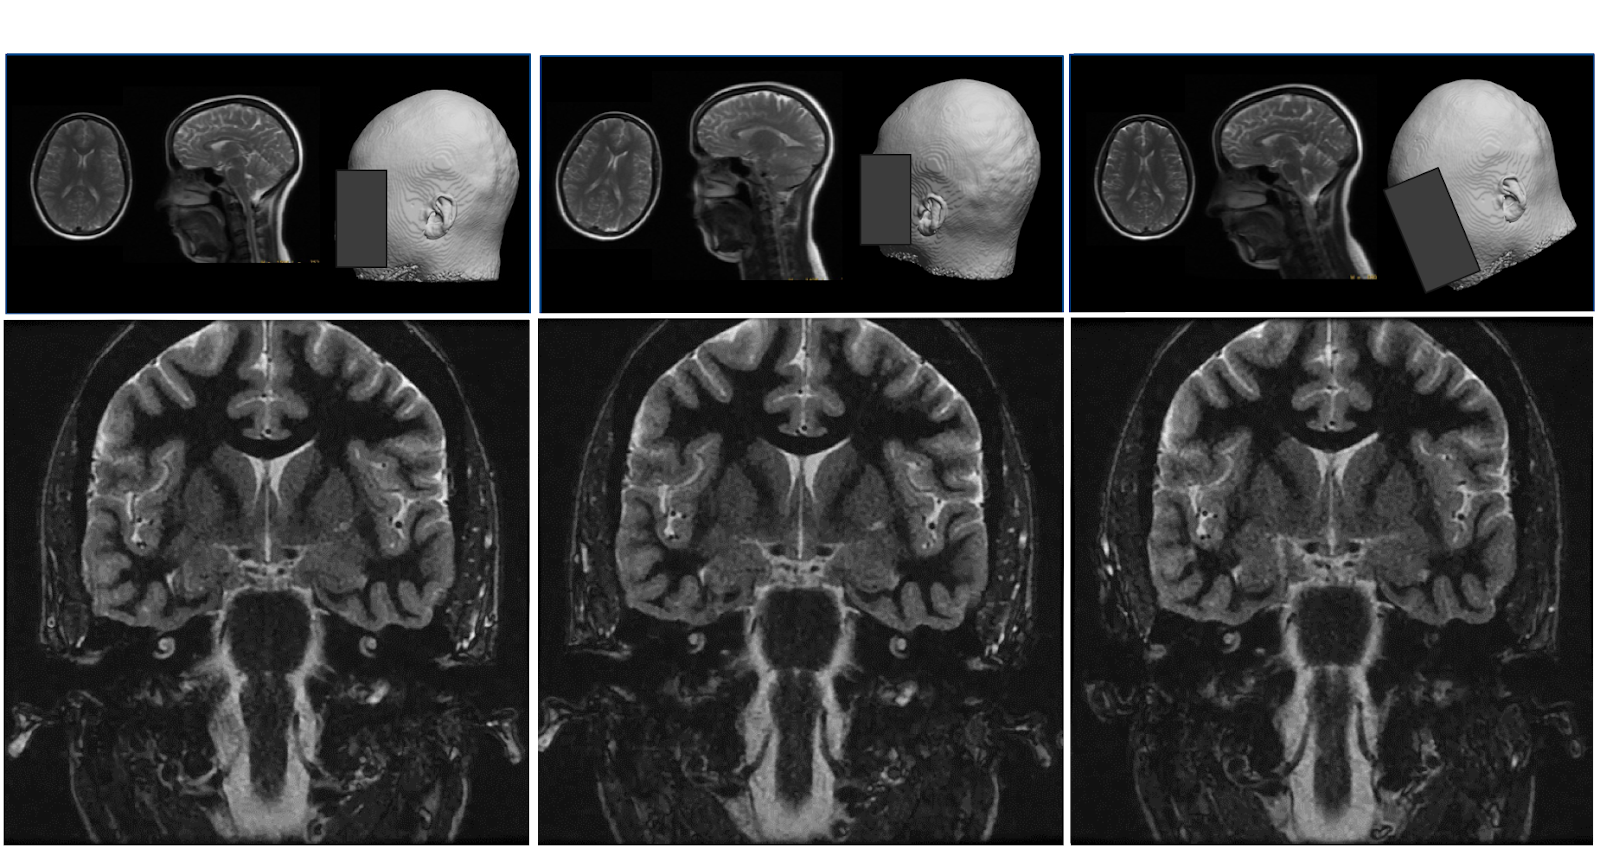 Consistent brain image orientation irrespective of various head rotations.